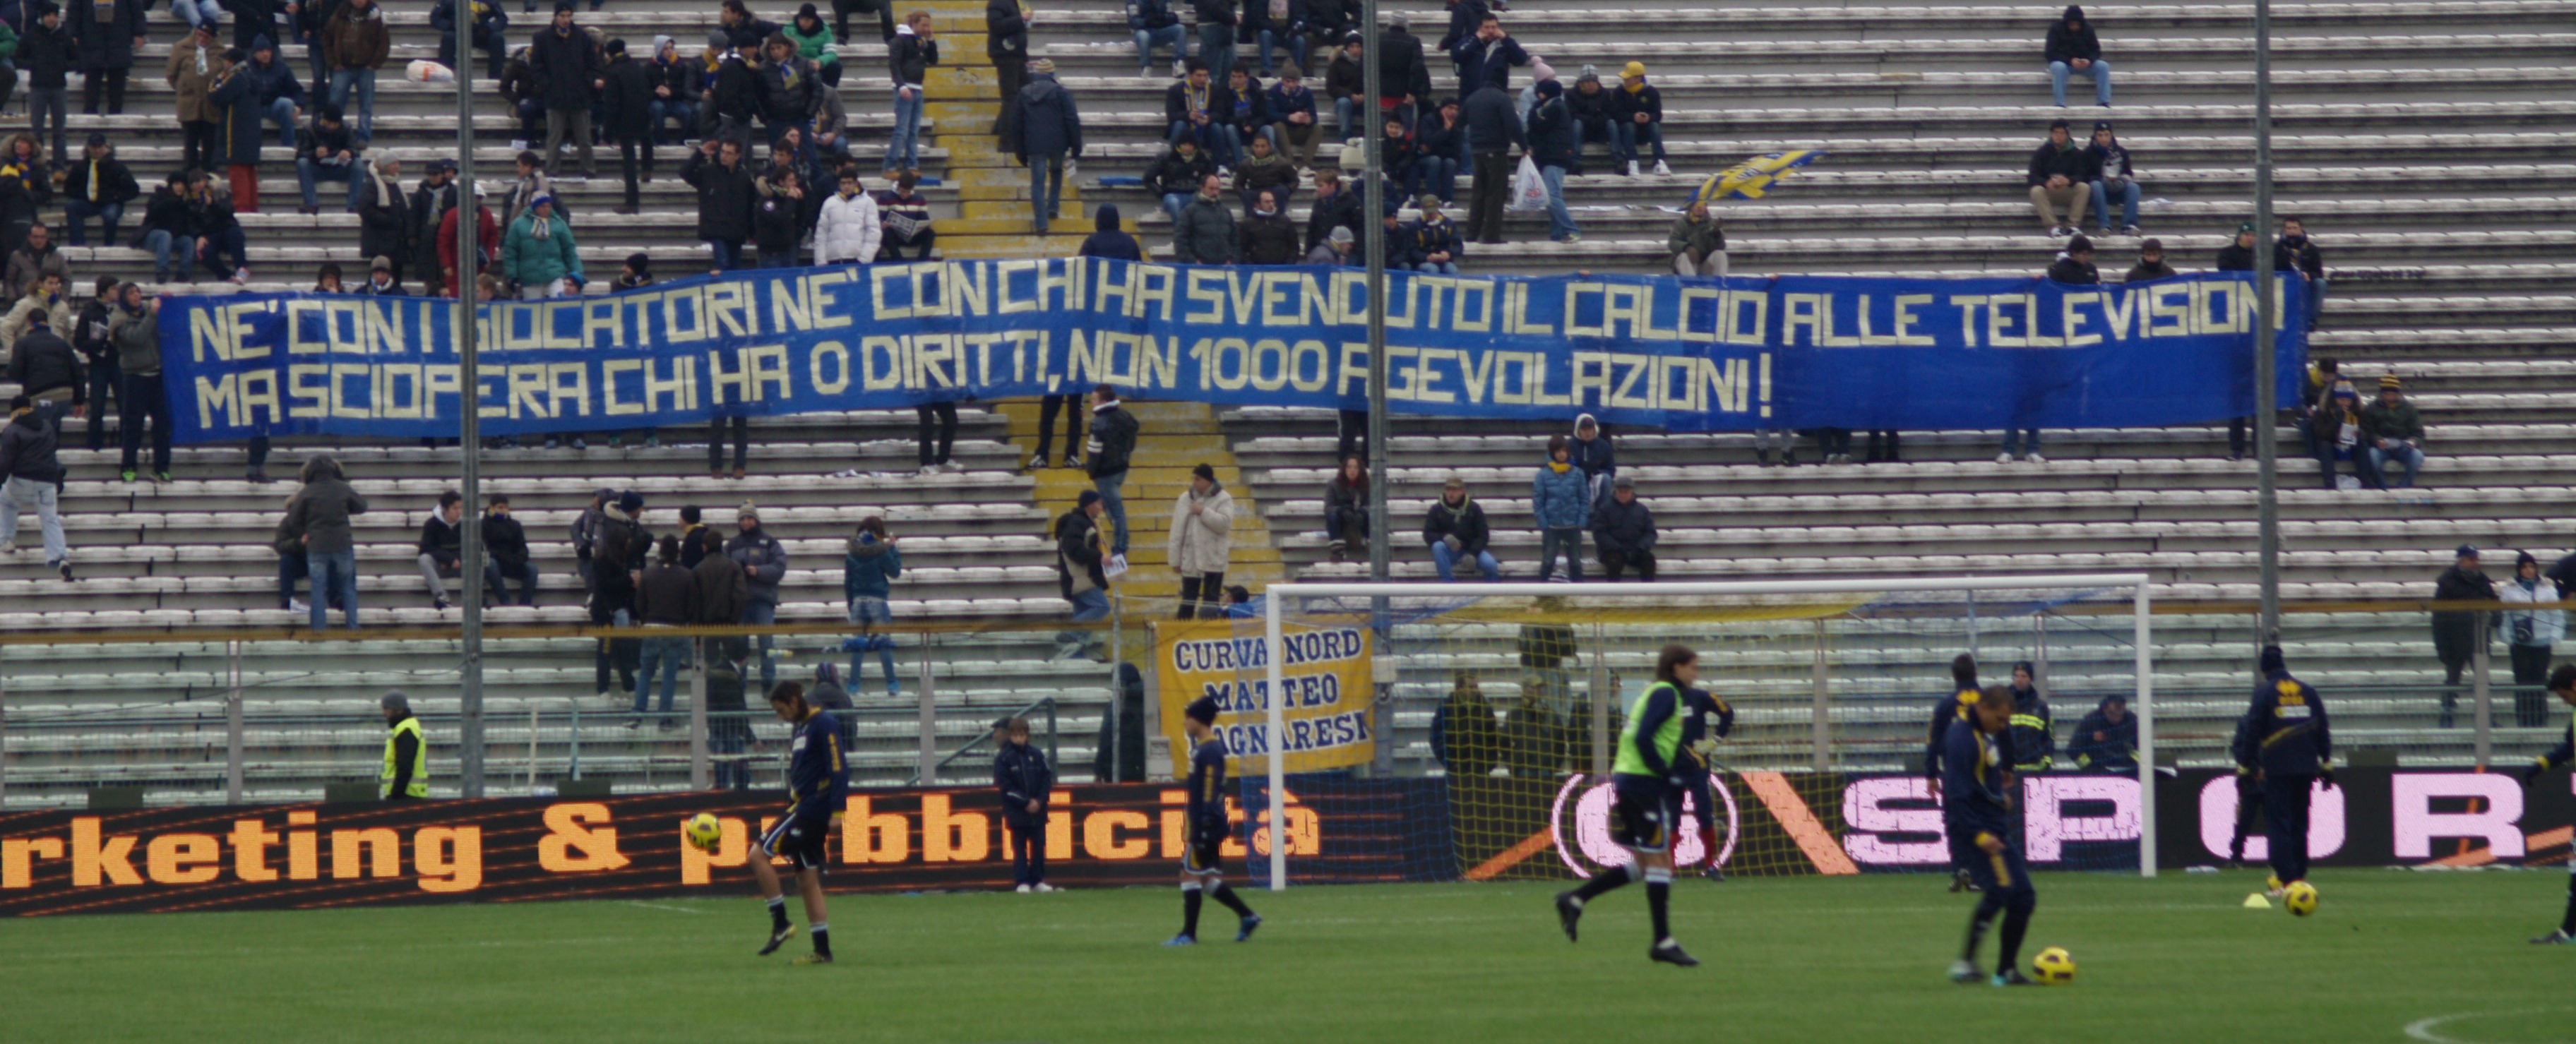 Parma - Udinese 2010/2011